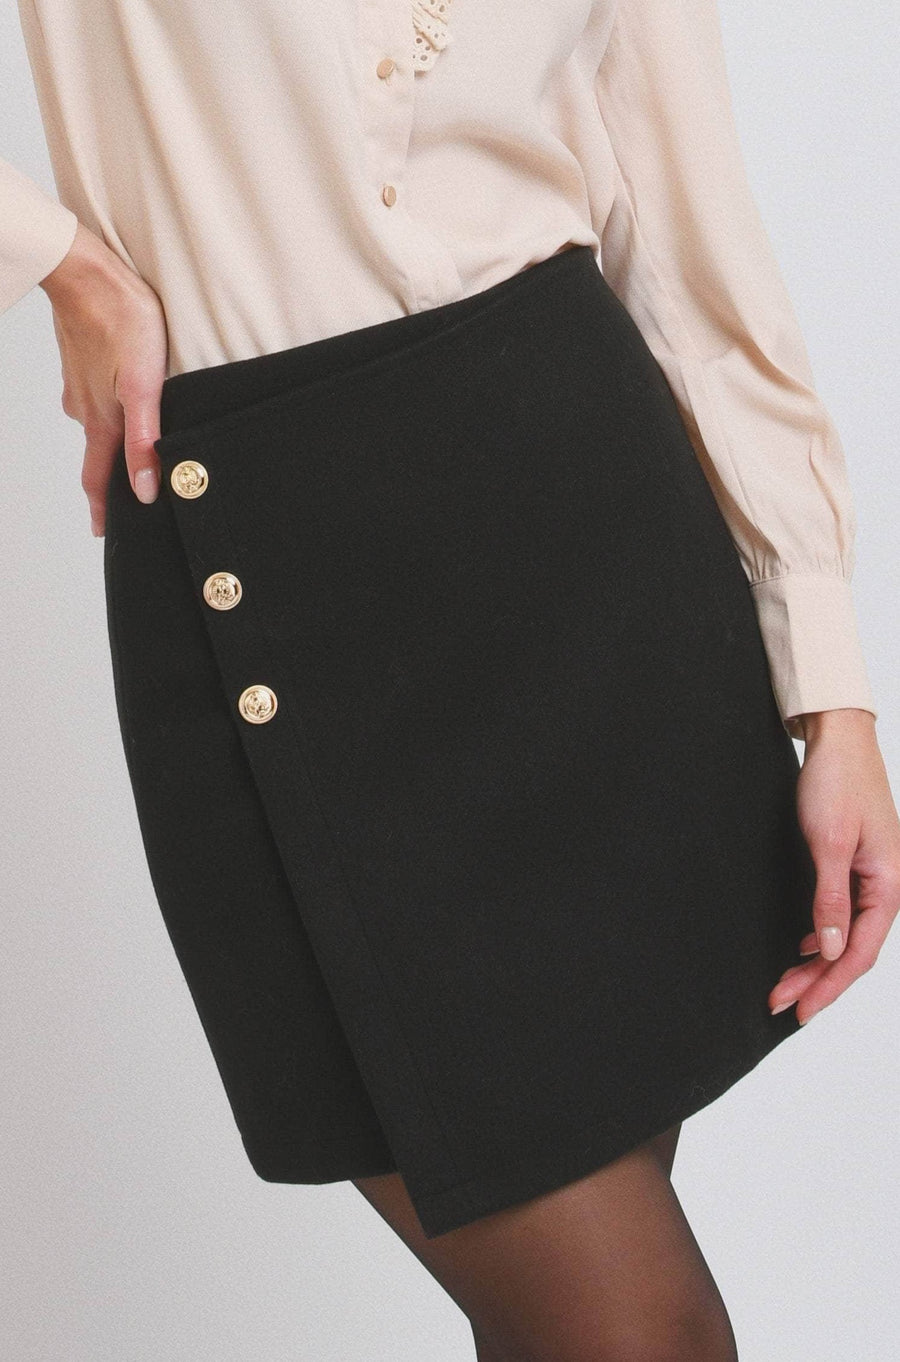 Pacifica skirt ✨ 